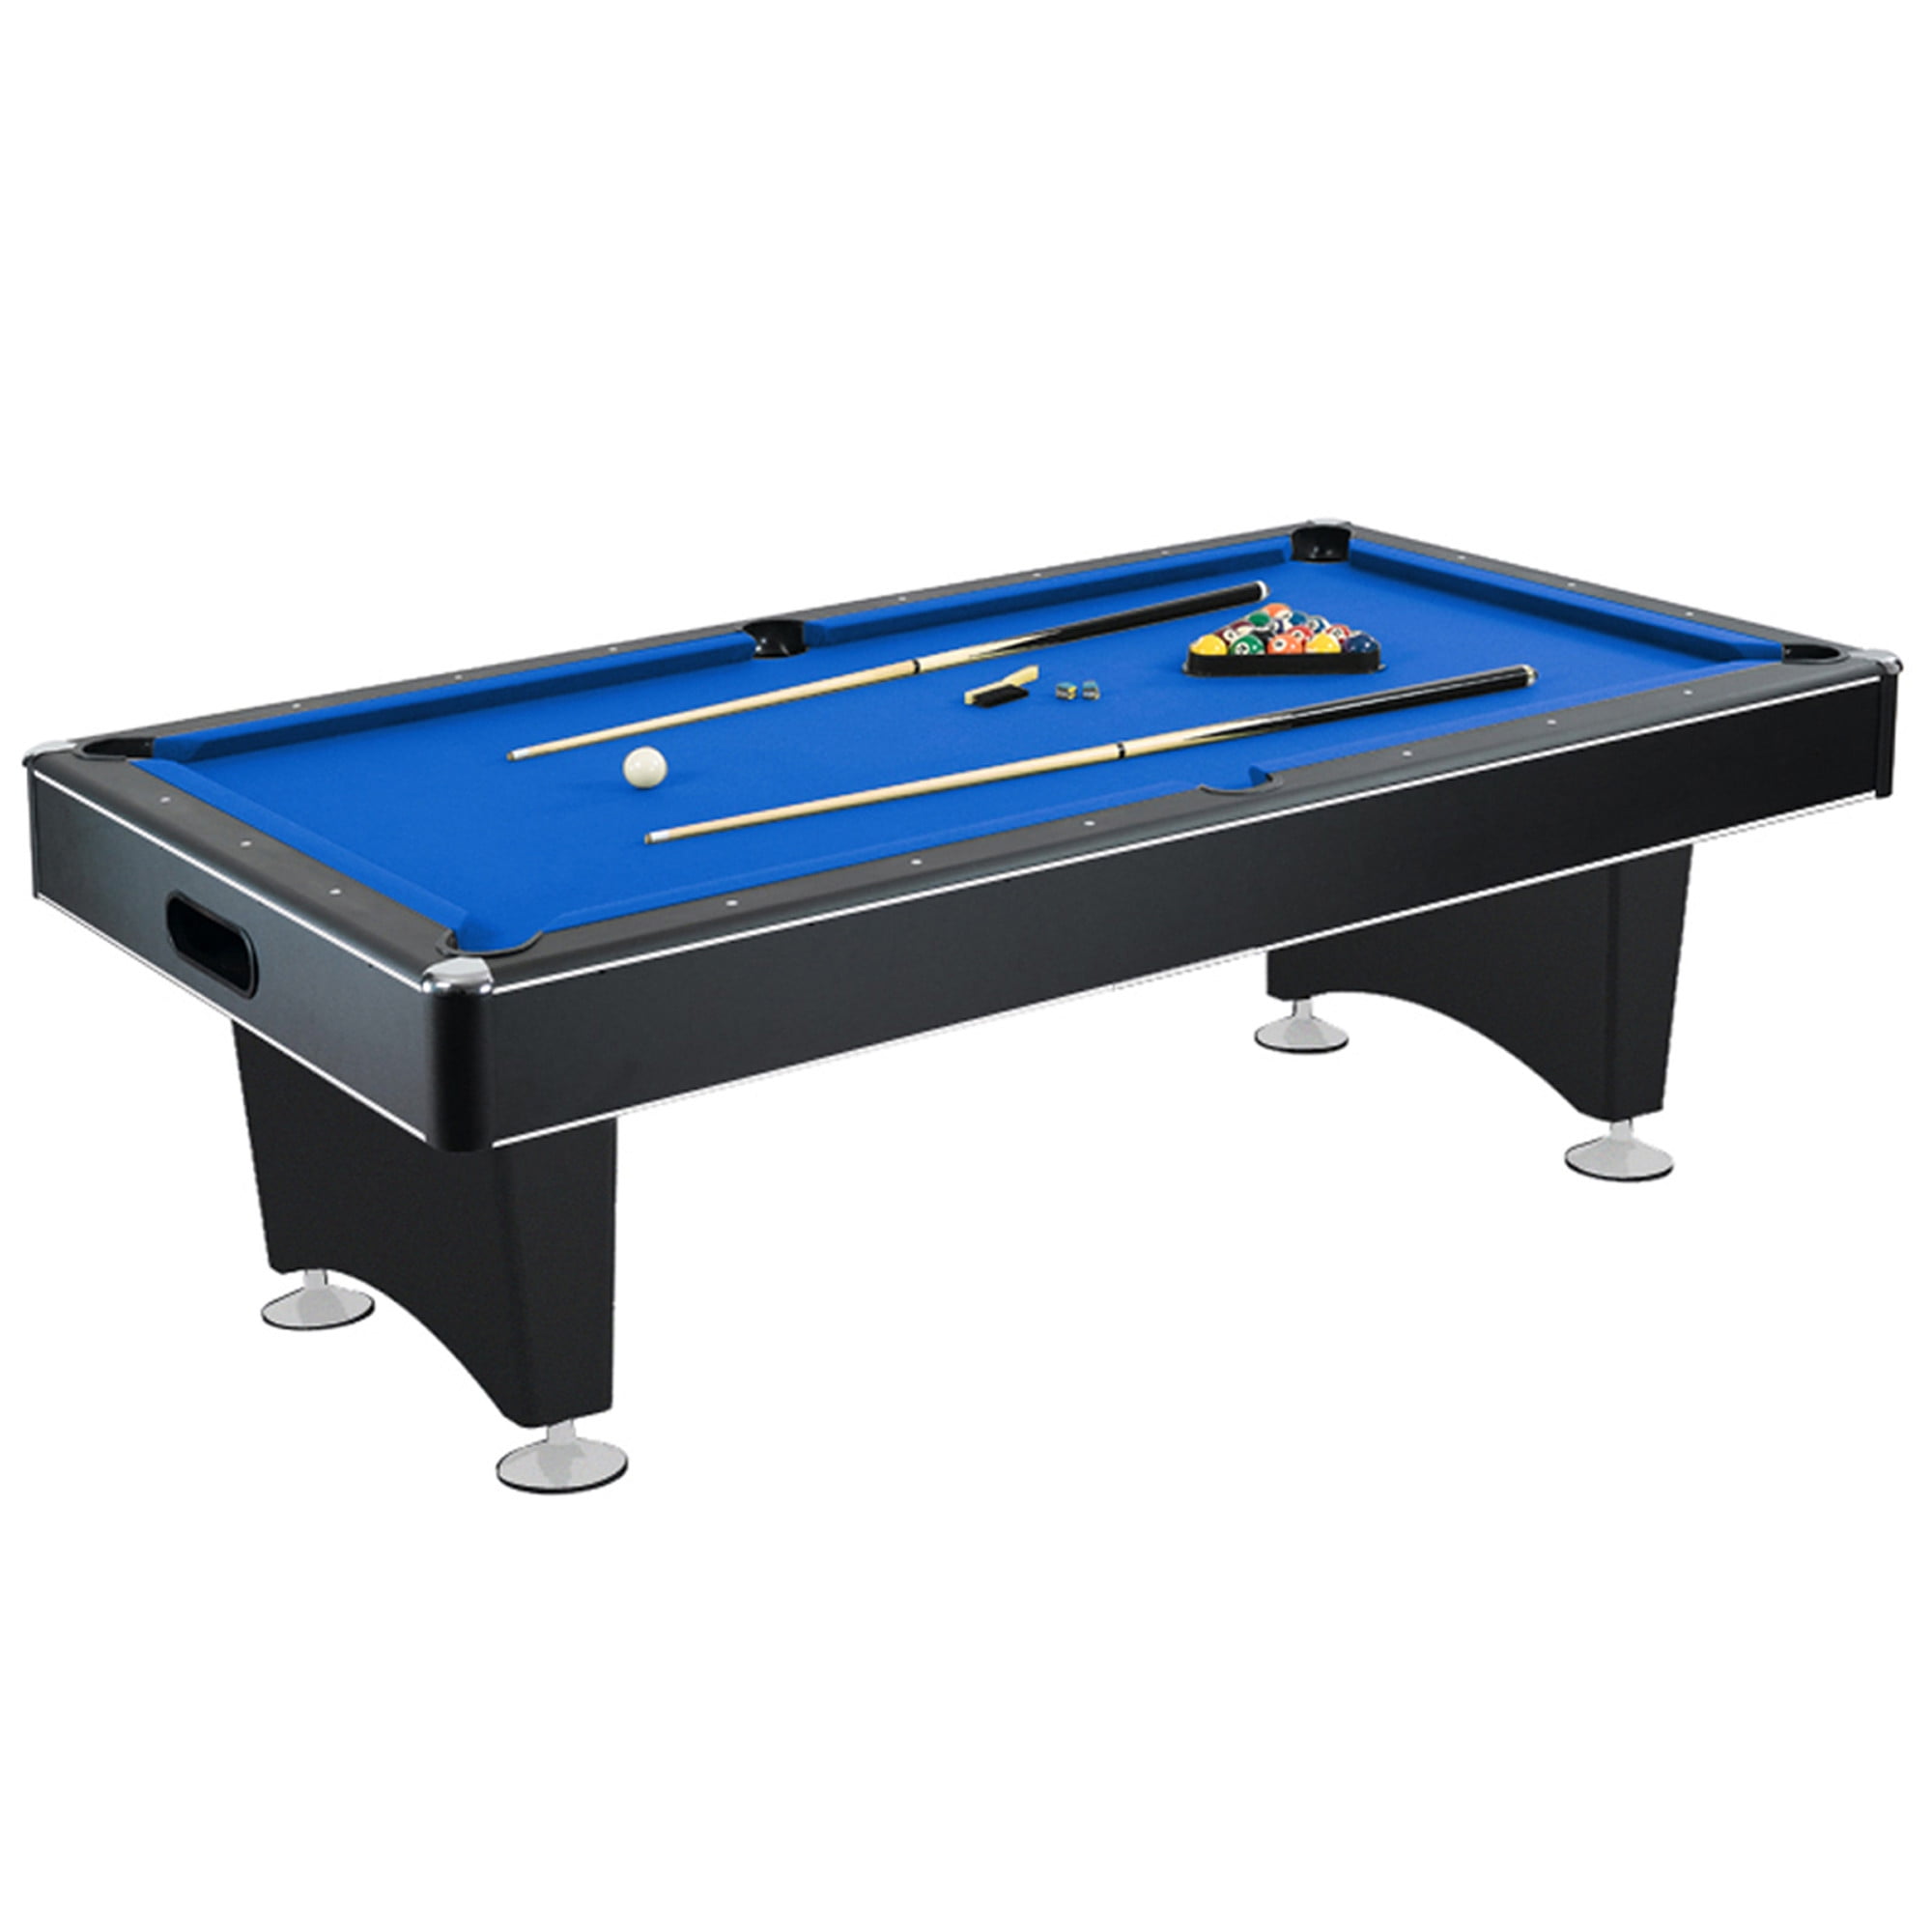 New Wooden Pool Billiard Snooker Cue Rack Stick Holder Hot Sale FI 